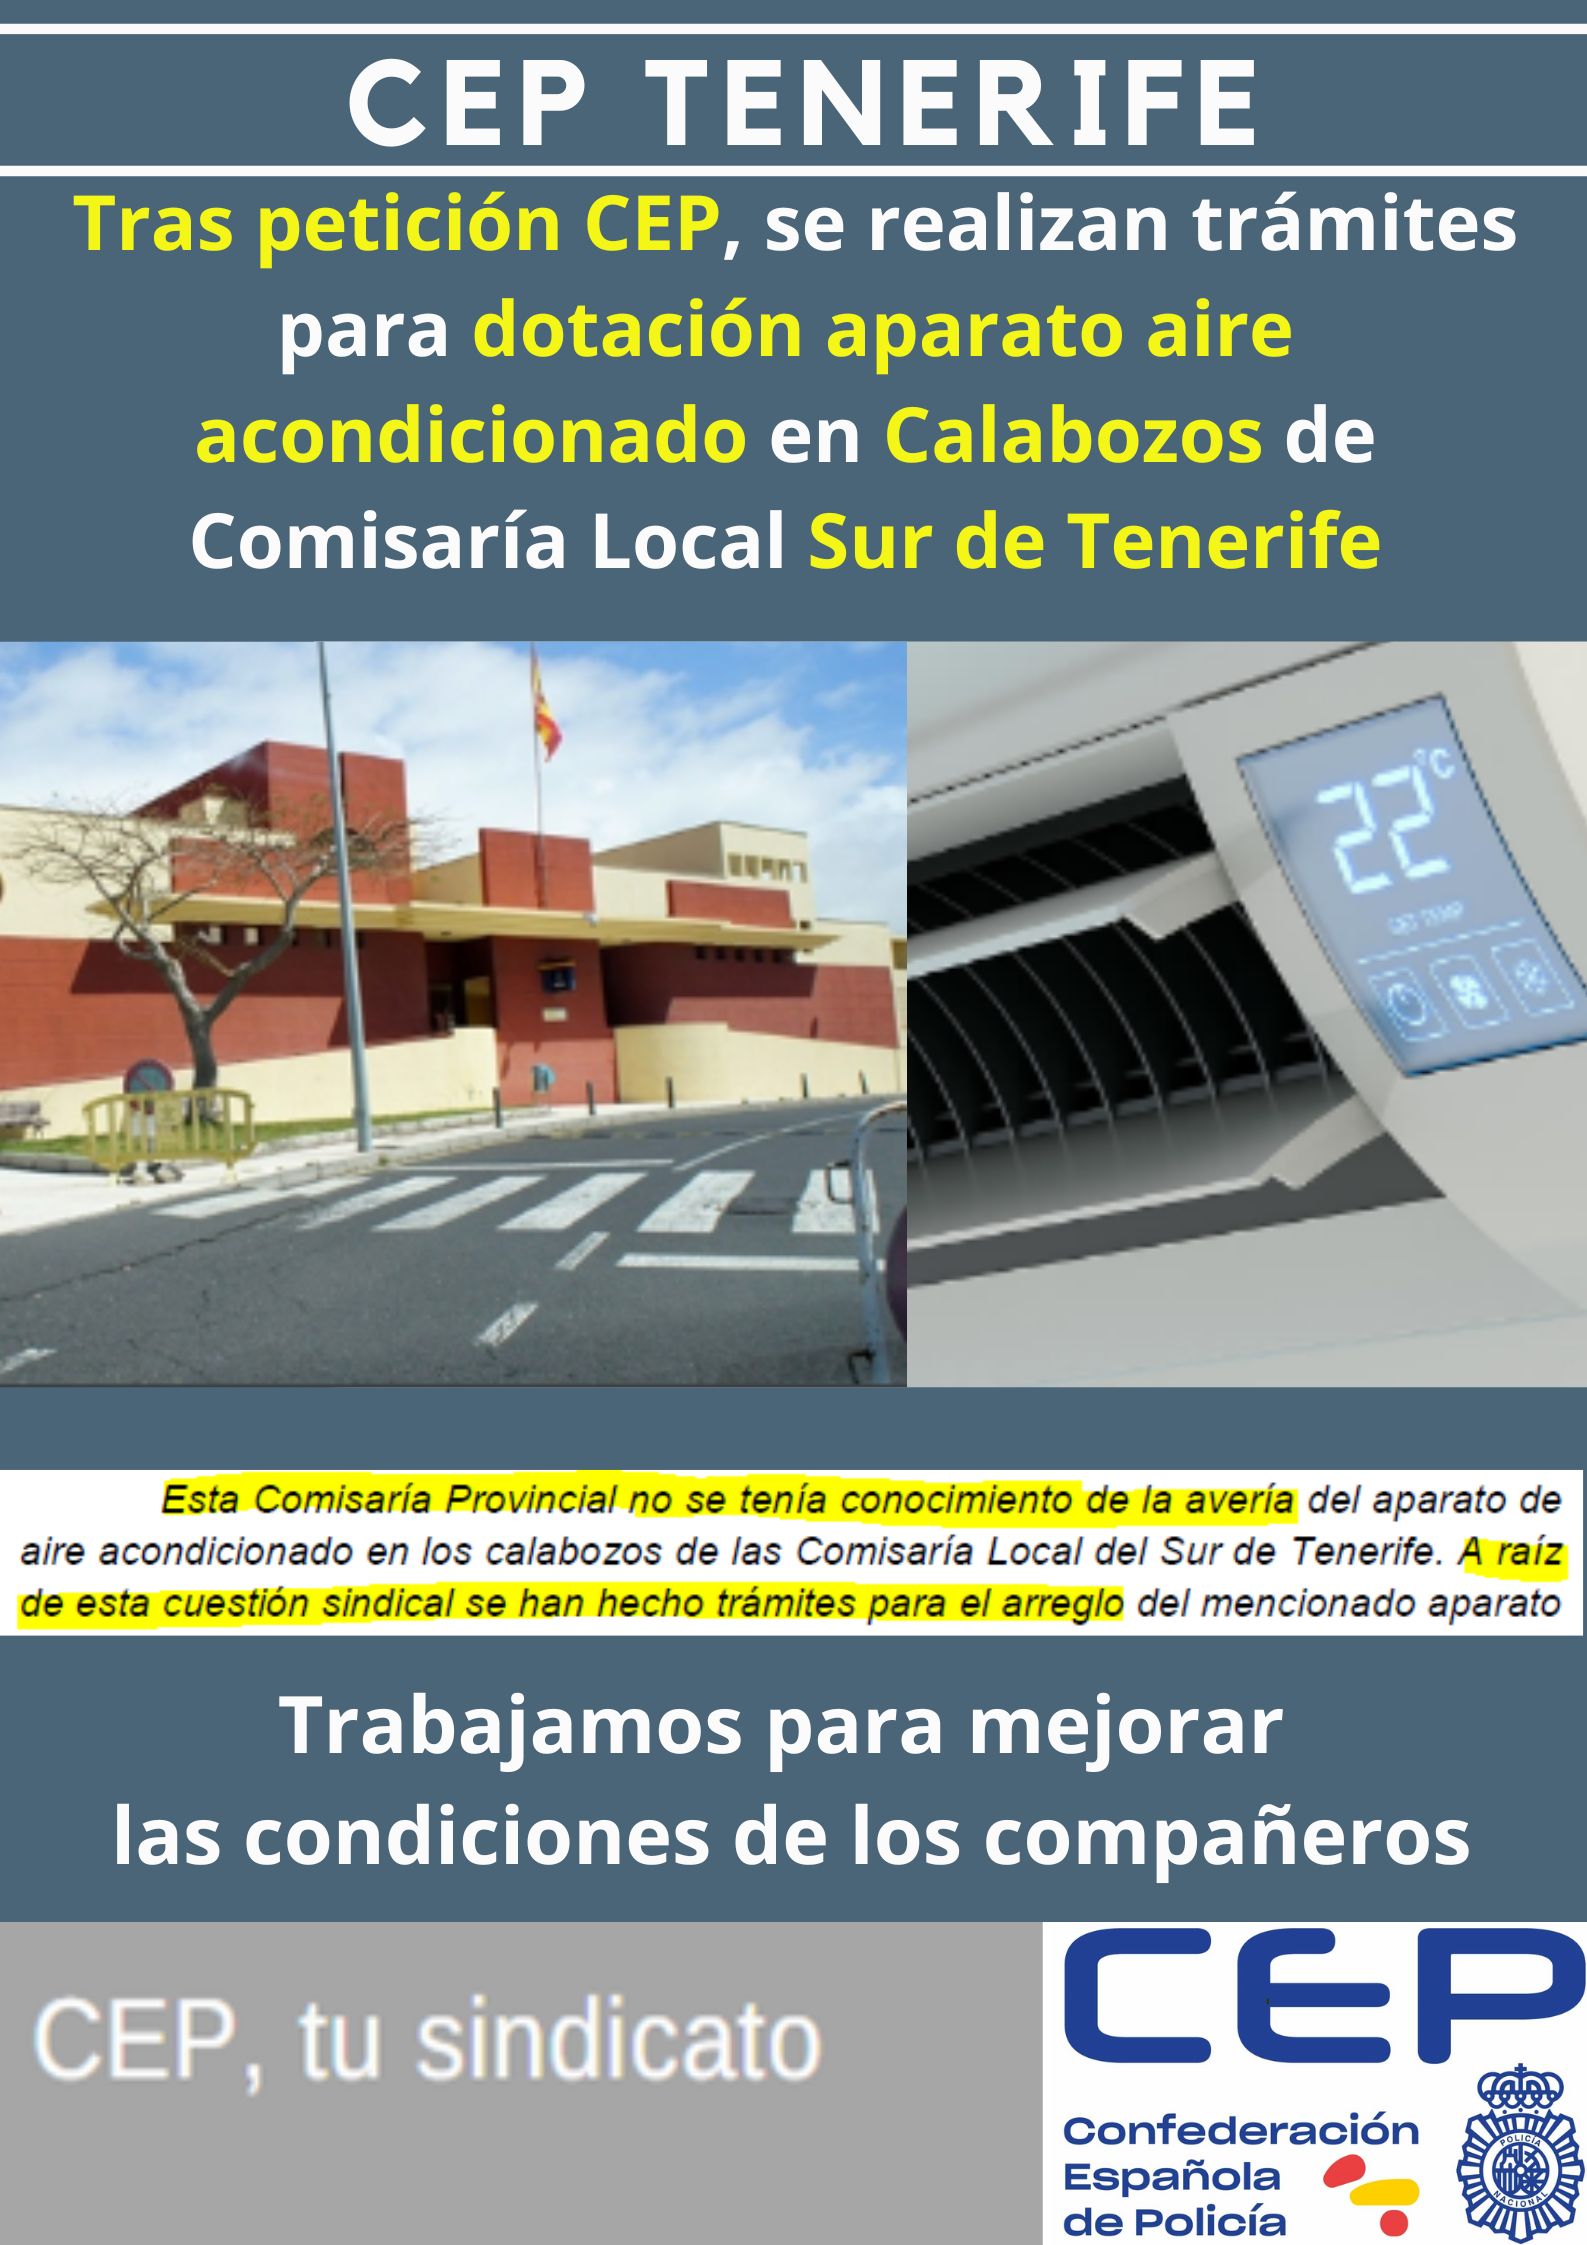 Tras petición CEP, se realizan trámites para dotación aparato aire acondicionado calabozos Sur de Tenerife